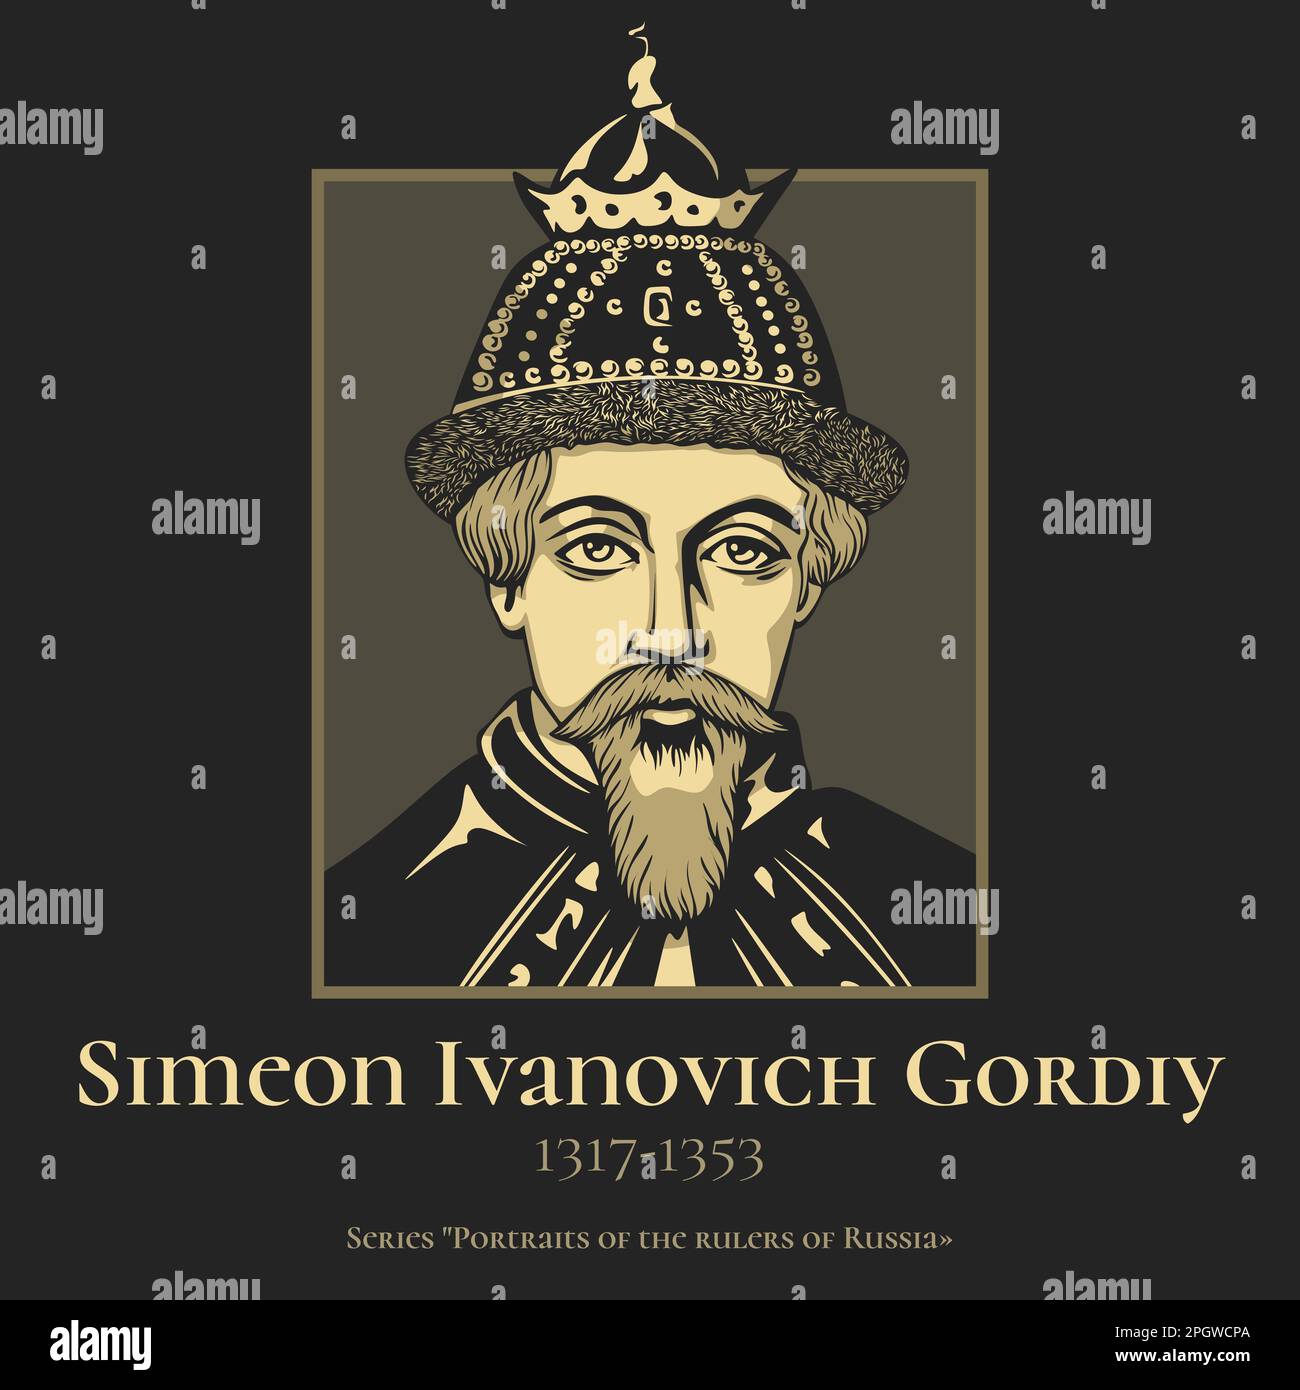 Simeon Ivanovich Gordiy (1317-1353) was Prince of Moscow and Grand Prince of Vladimir. Stock Vector